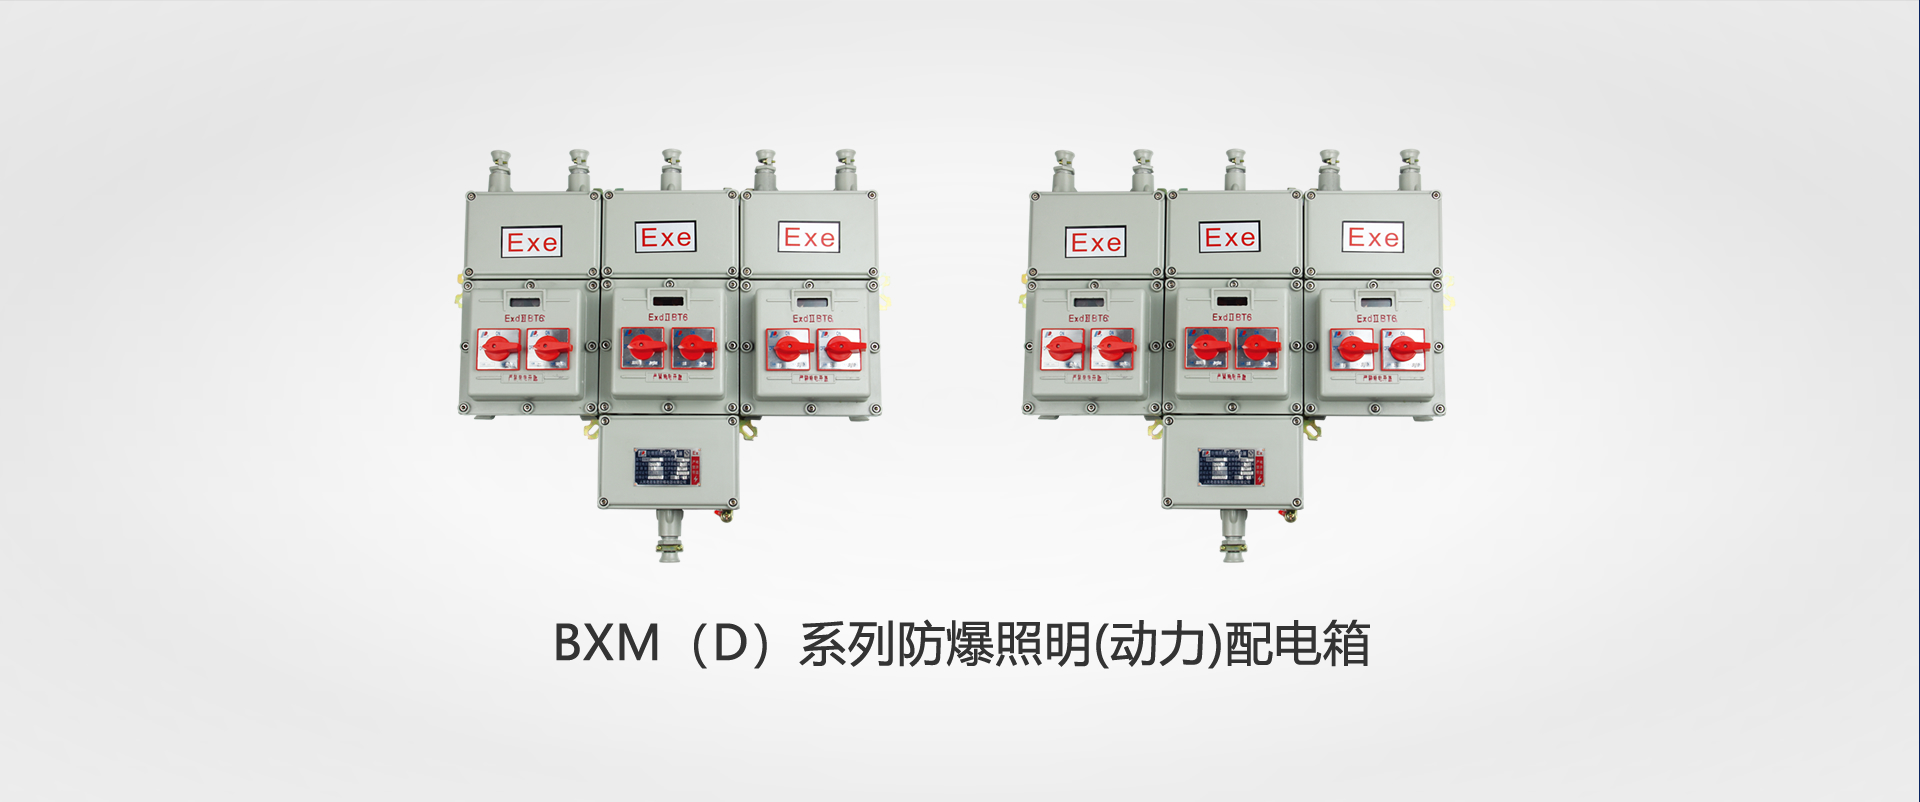 BXM（D）系列防爆照明(動力)配電(dian)箱